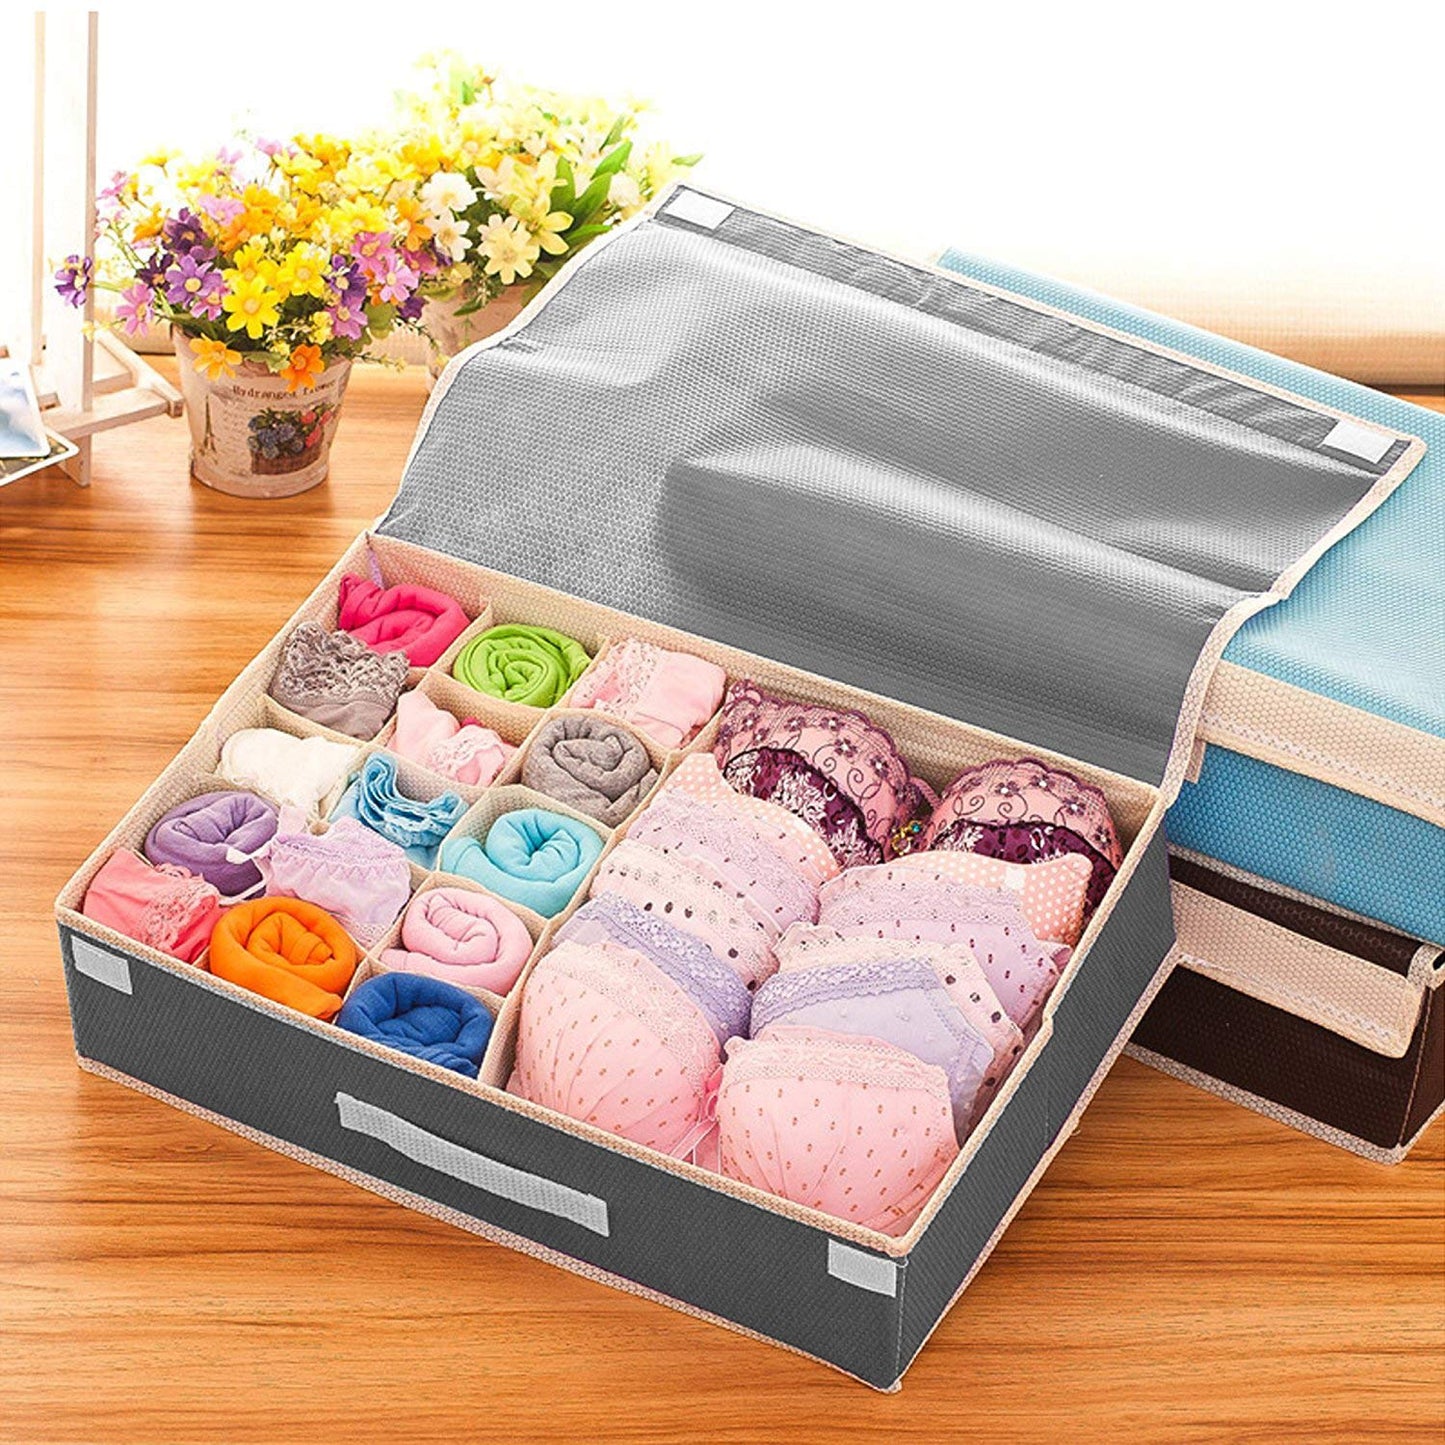 Innerwear Organizer 16+1 Compartment Foldable Fabric Storage Box - (44 x 28 x 12 cm)